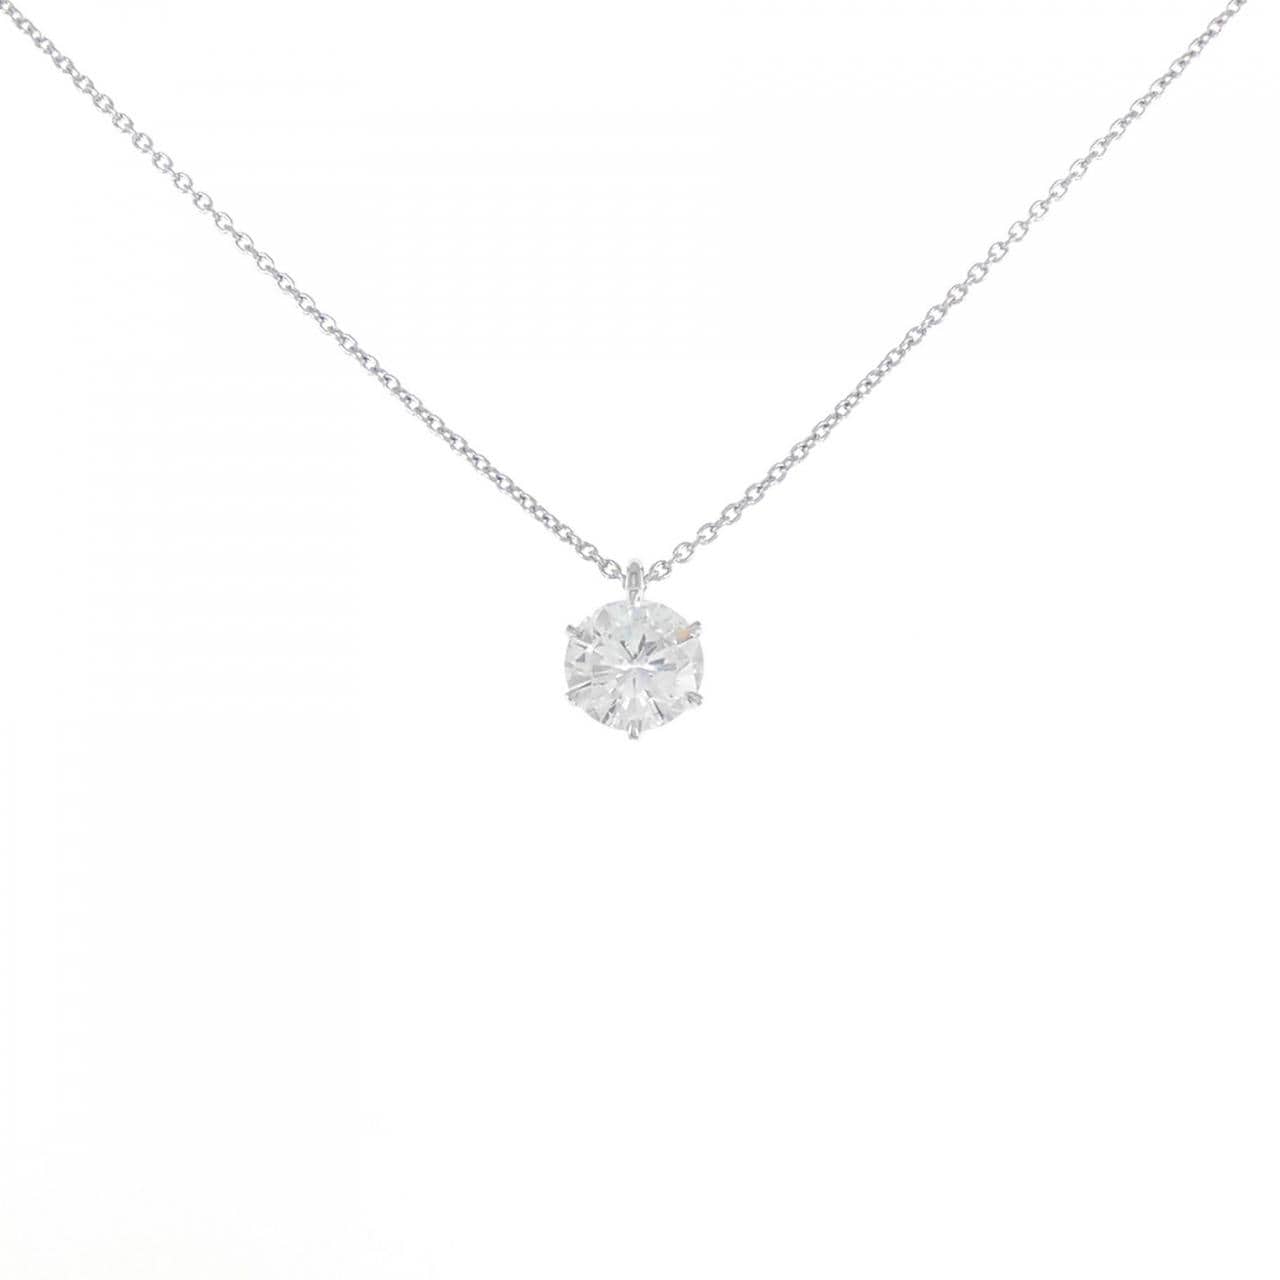 [Remake] PT Diamond Necklace 1.085CT E I1 Good